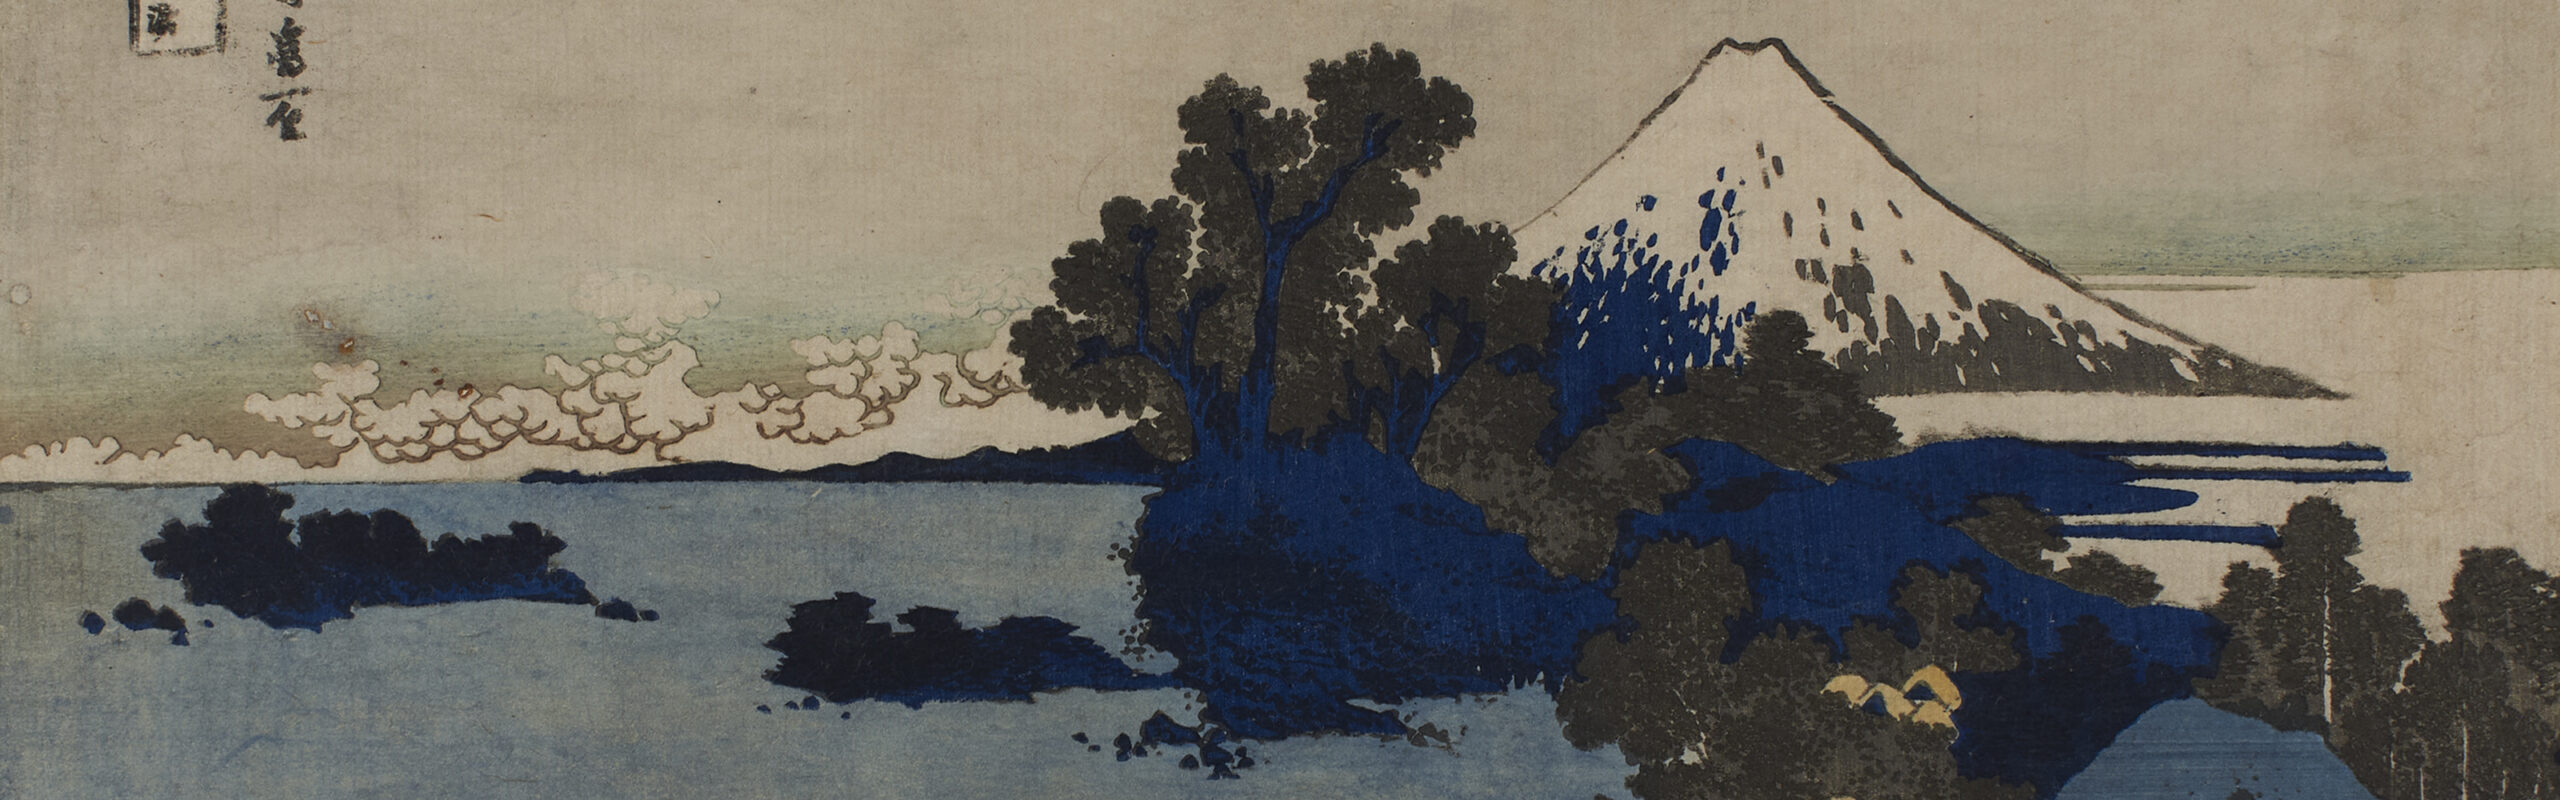 Katsushika Hokusai (Japanese, 1760–1849), Seven-Mile Beach in Sagami Province, c. 1830, from the series Thirty-six Views of Mt. Fuji (Fugaku sanjurokkei) published by Nishimuraya Yohachi , c.1830–33, woodblock print, 10 x 14-3/4 inches.Gift of Dr. William E. Harkins, 79.24